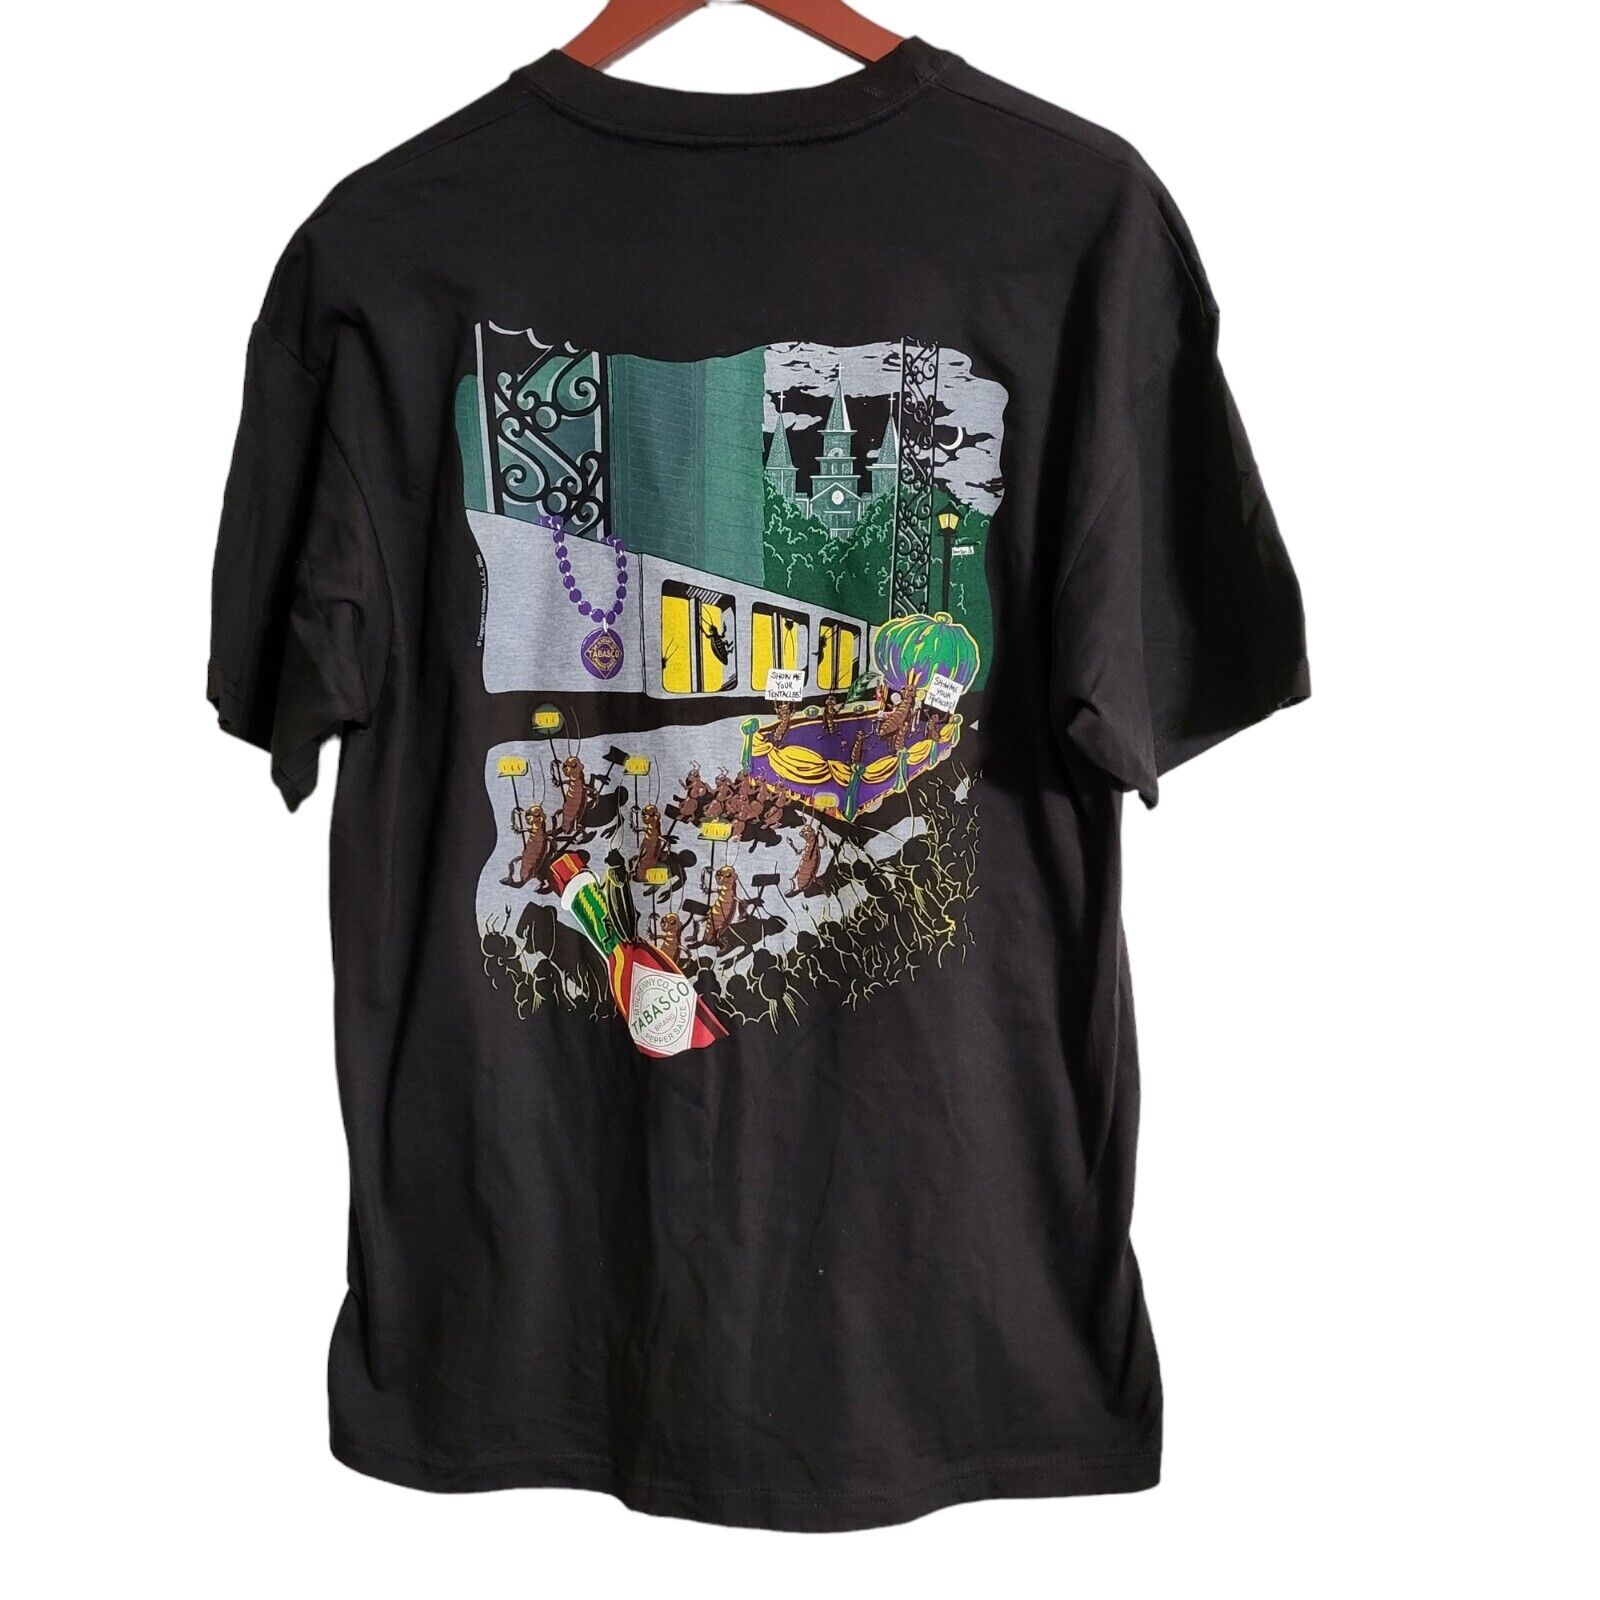 🌶️🪳 2000 vintage TABASCO MARDI GRAS ROACHES promo t-shirt Large az